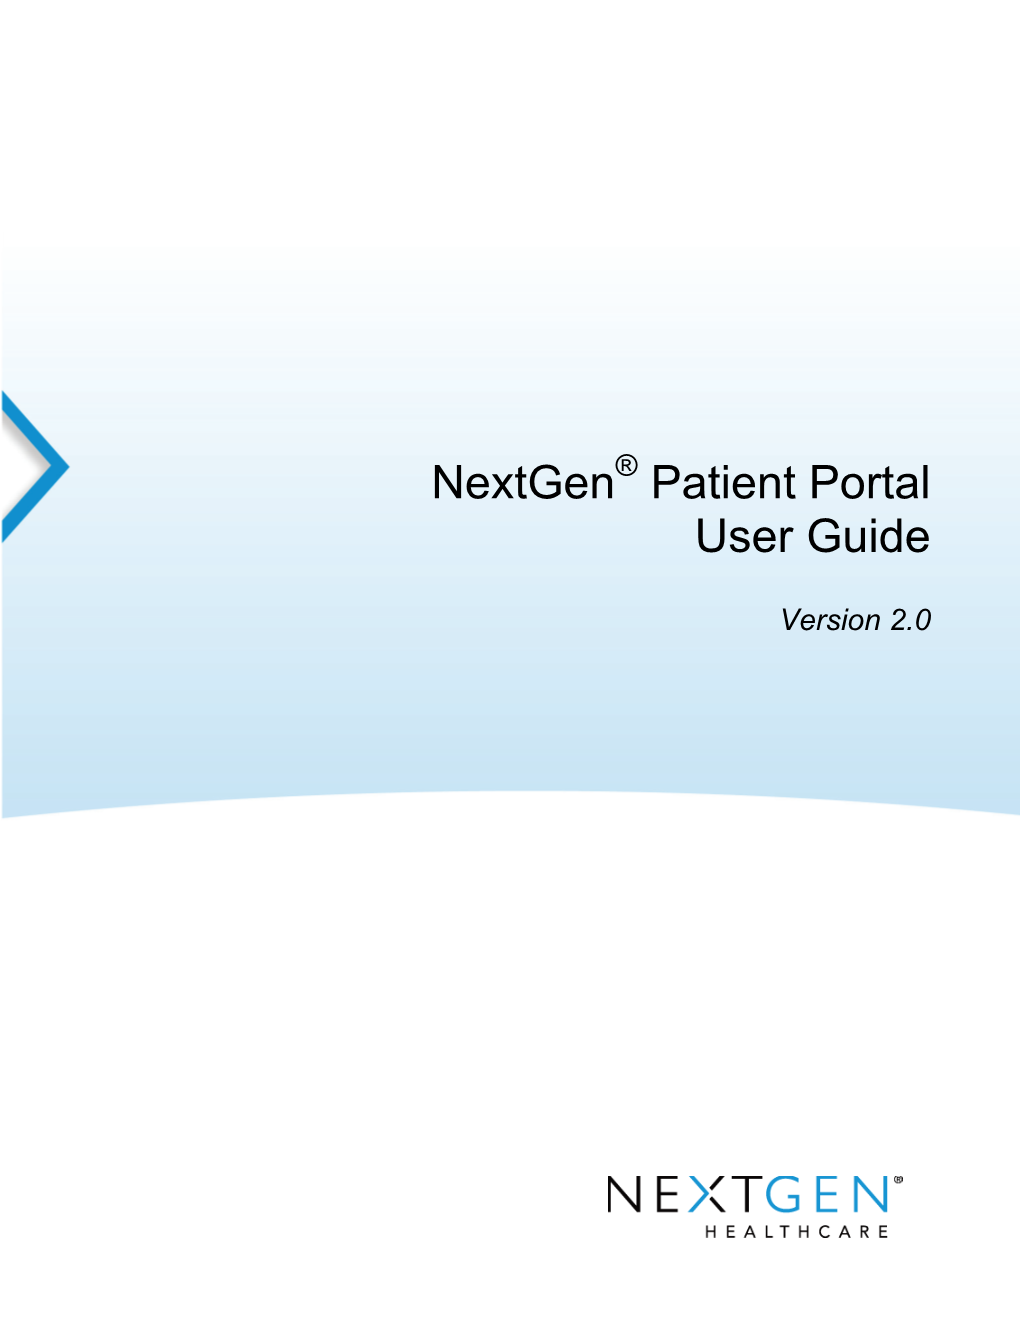 Nextgen Patient Portal User Guide, Version 2.0